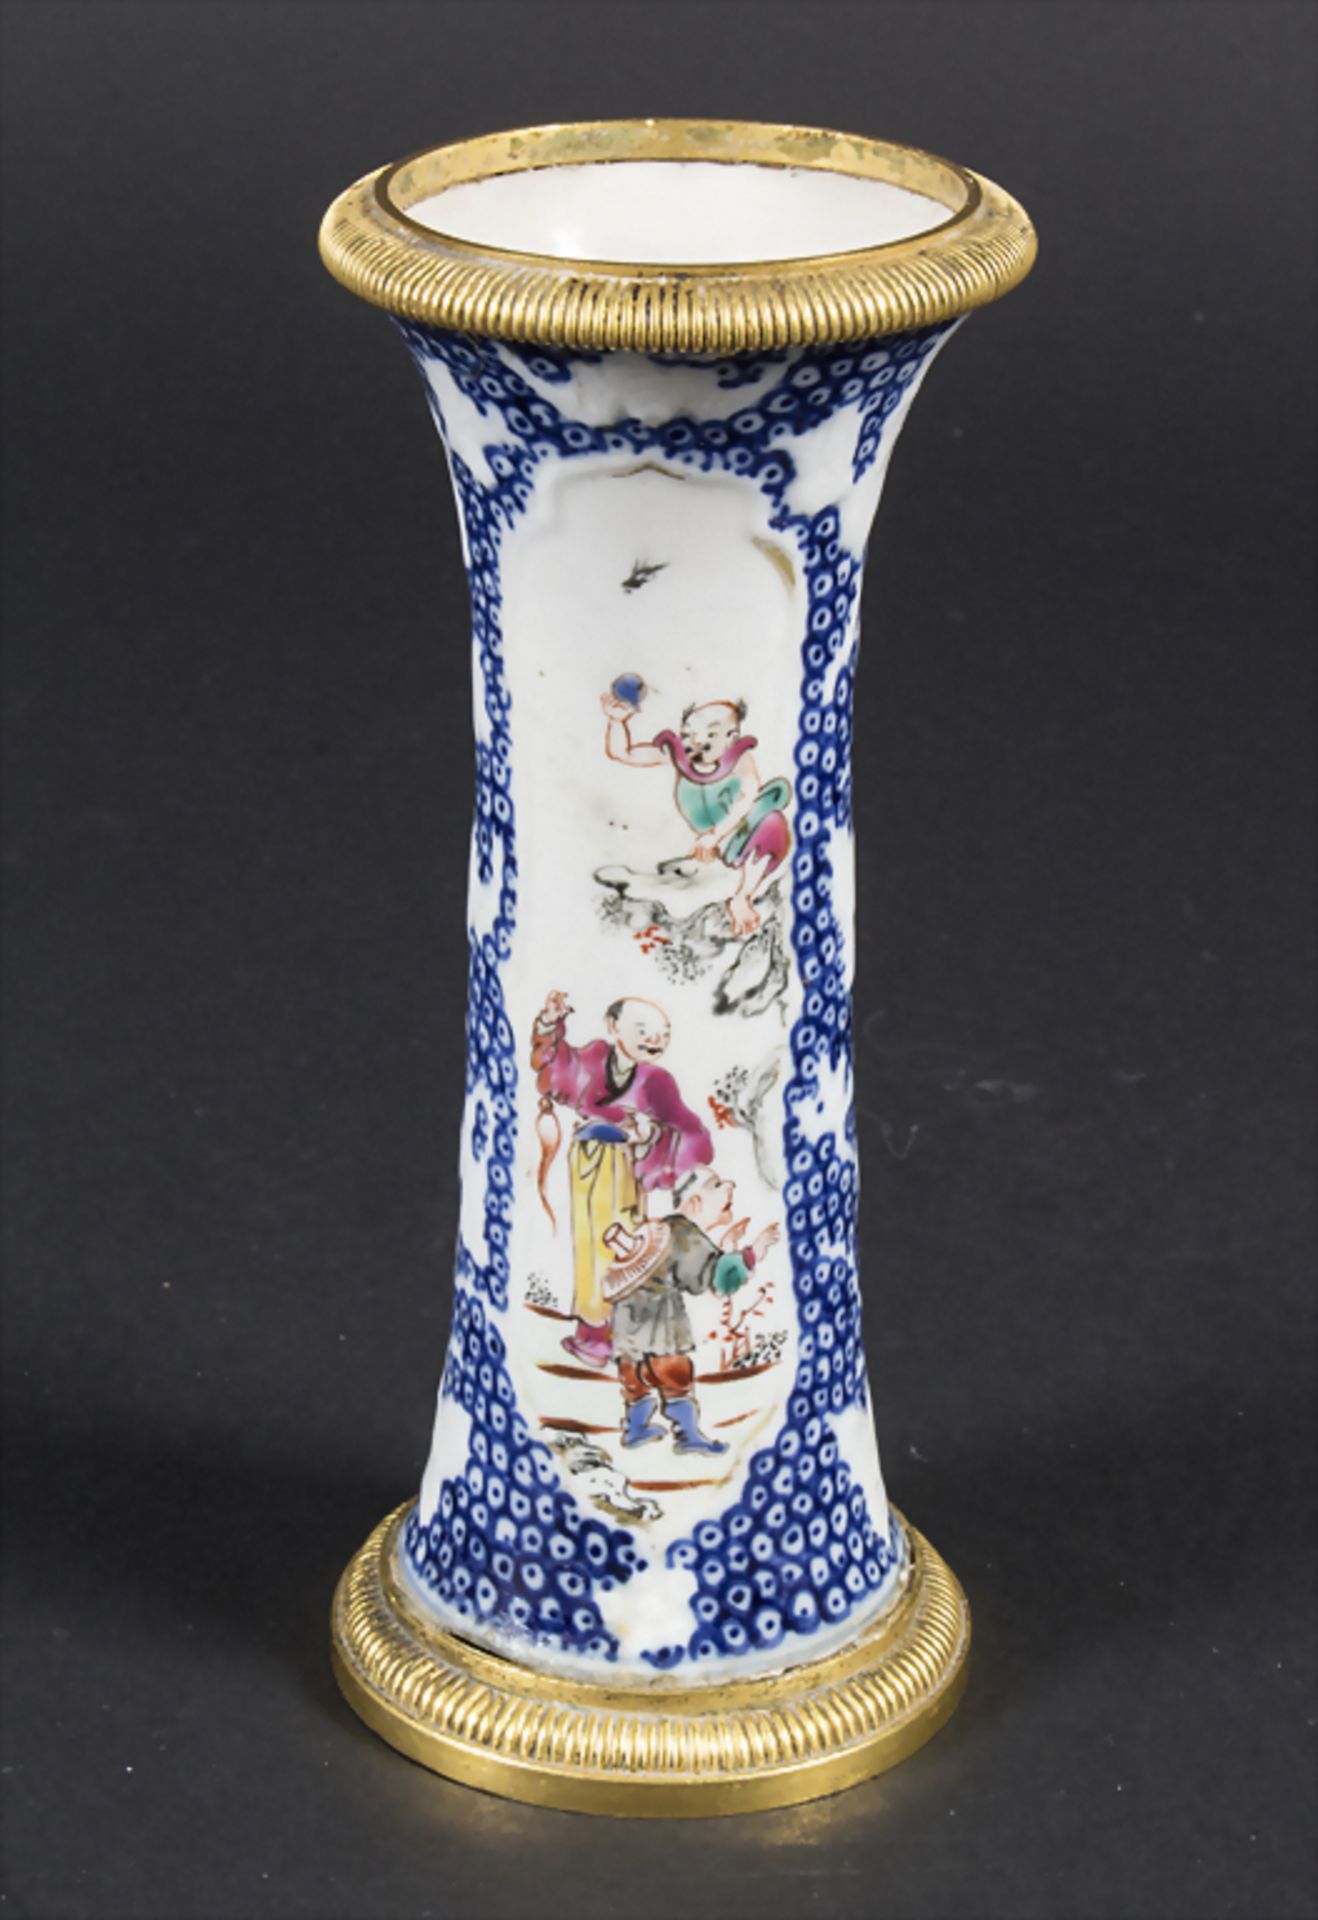 Ziervase / A decorative porcelain vase, China, Qing Dynastie (1644-1911), 18. Jh.Mater